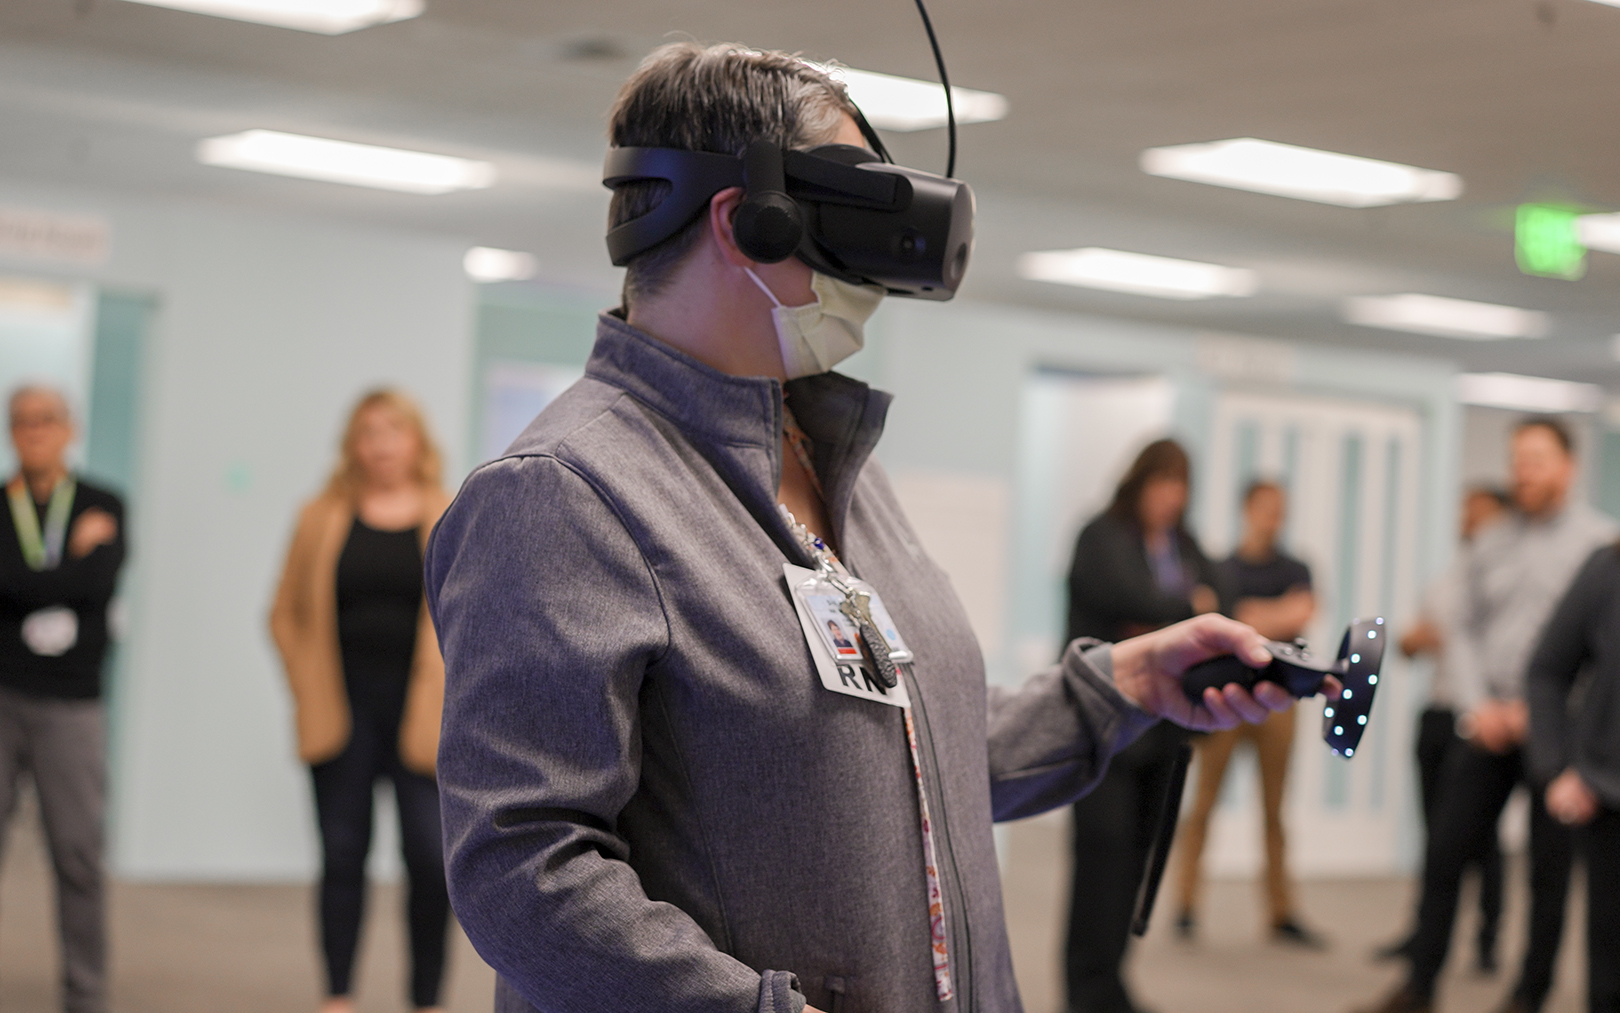 AR VR in Healthcare Design